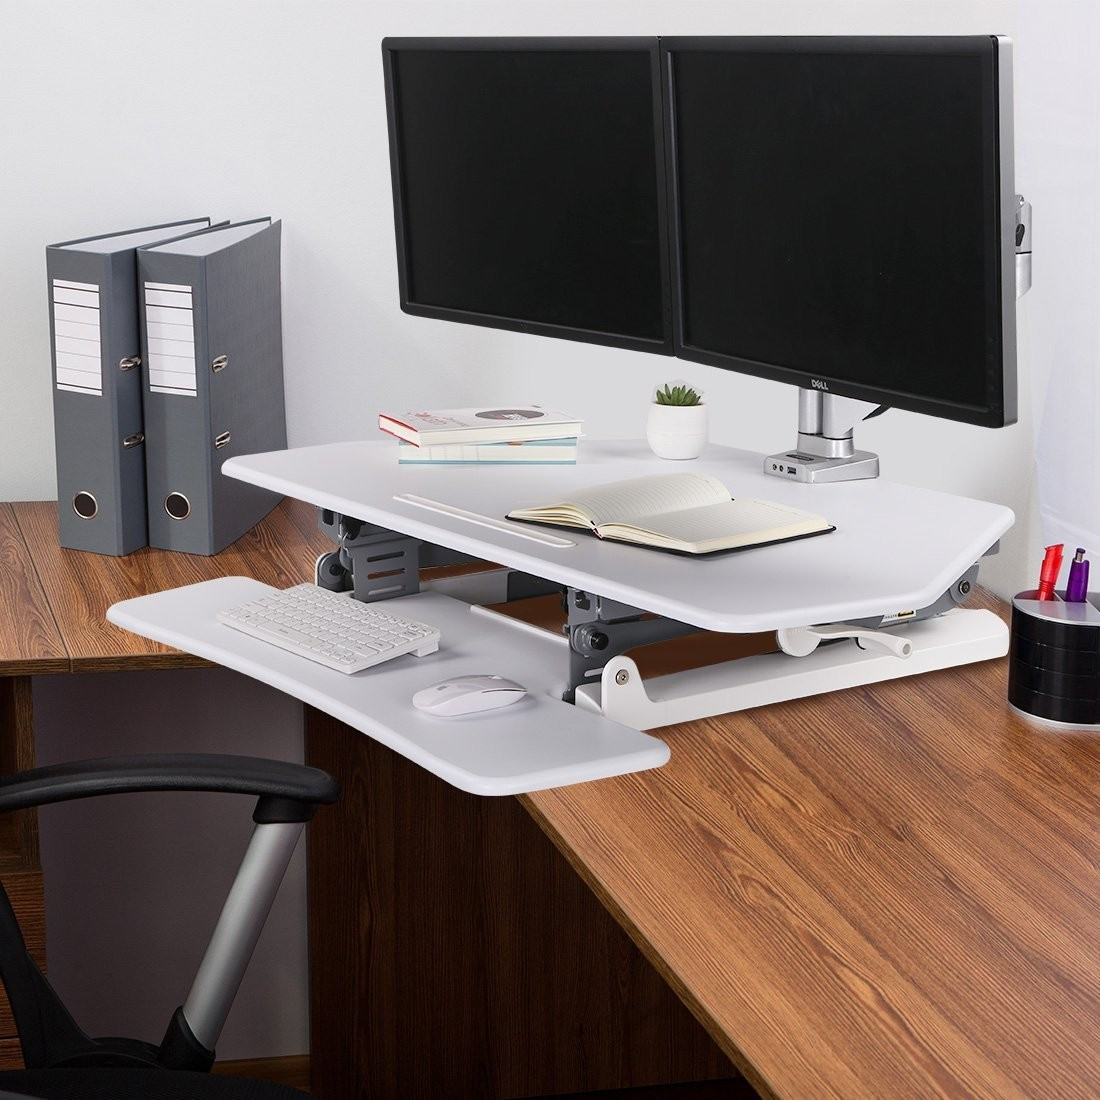 Best ideas about Standing Desk Converter DIY
. Save or Pin FlexiSpot Standing Desk Converter 27" Width Now.